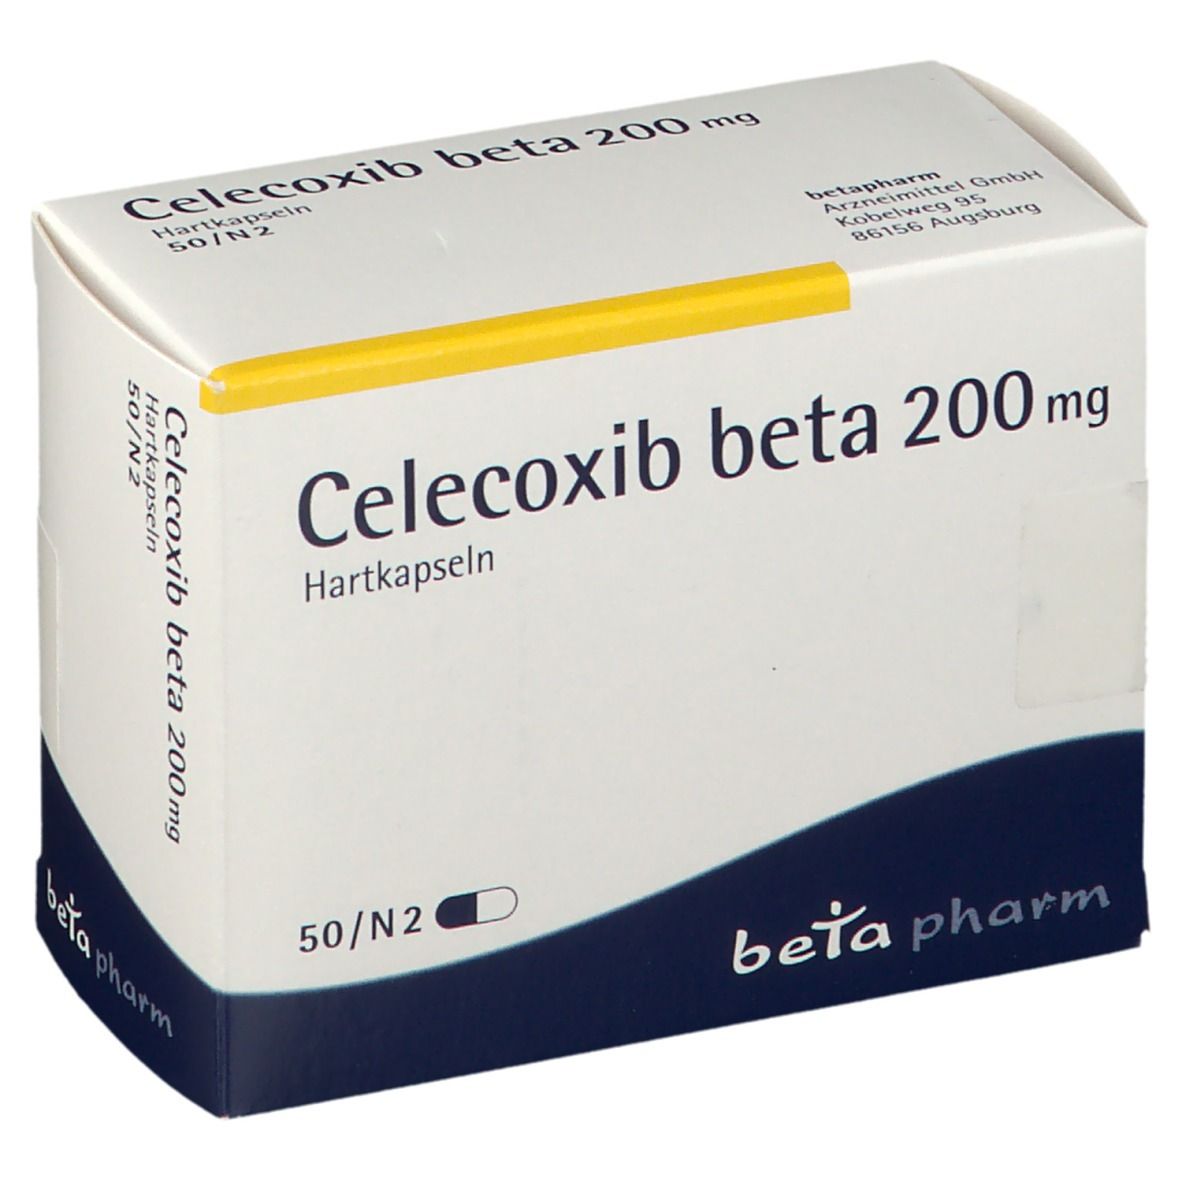 Celecoxib beta 200 mg